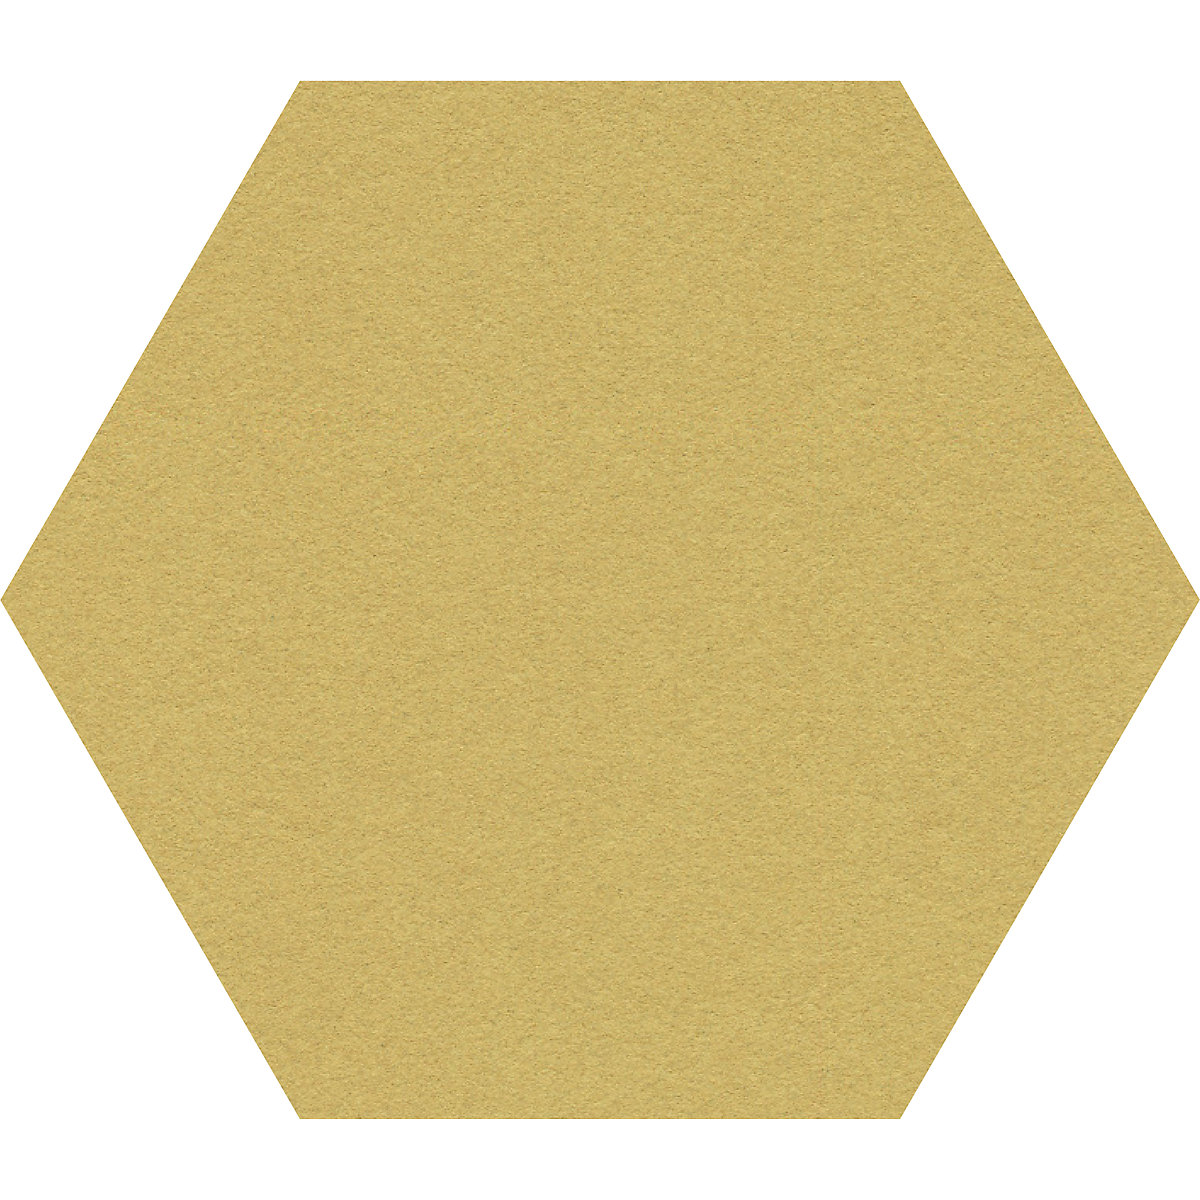 Hexagonal designer pin board – Chameleon, cork, WxH 600 x 600 mm, yellow-32